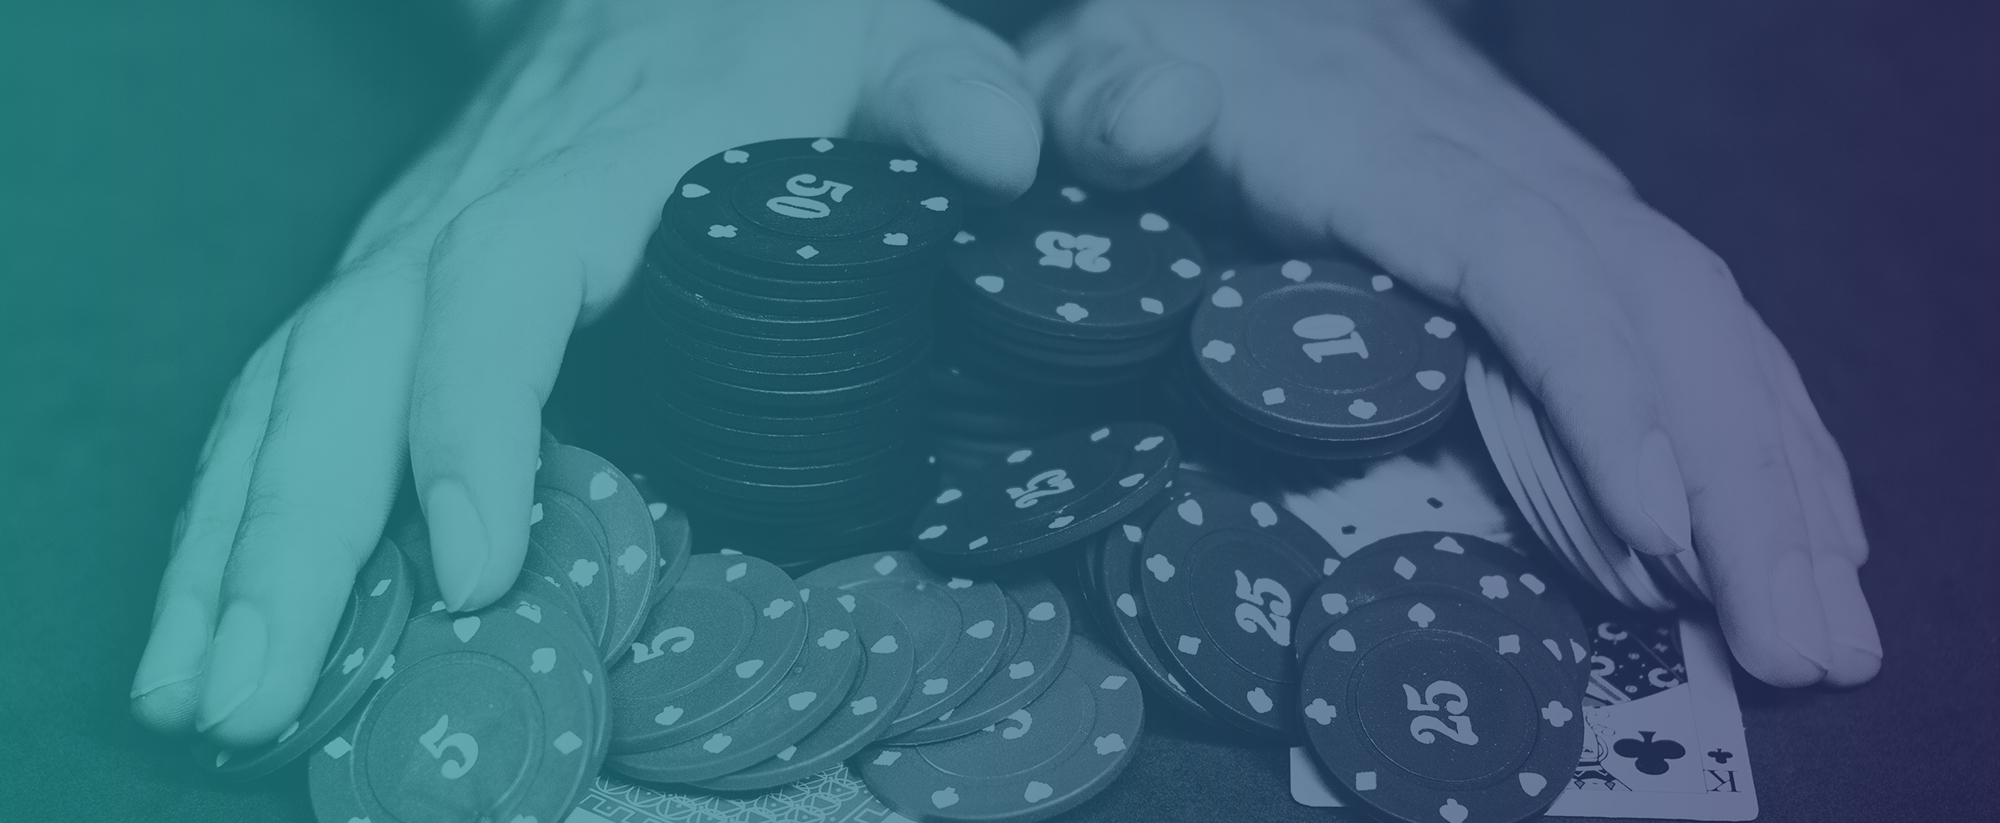 gambling law min bet to be consideredgambling